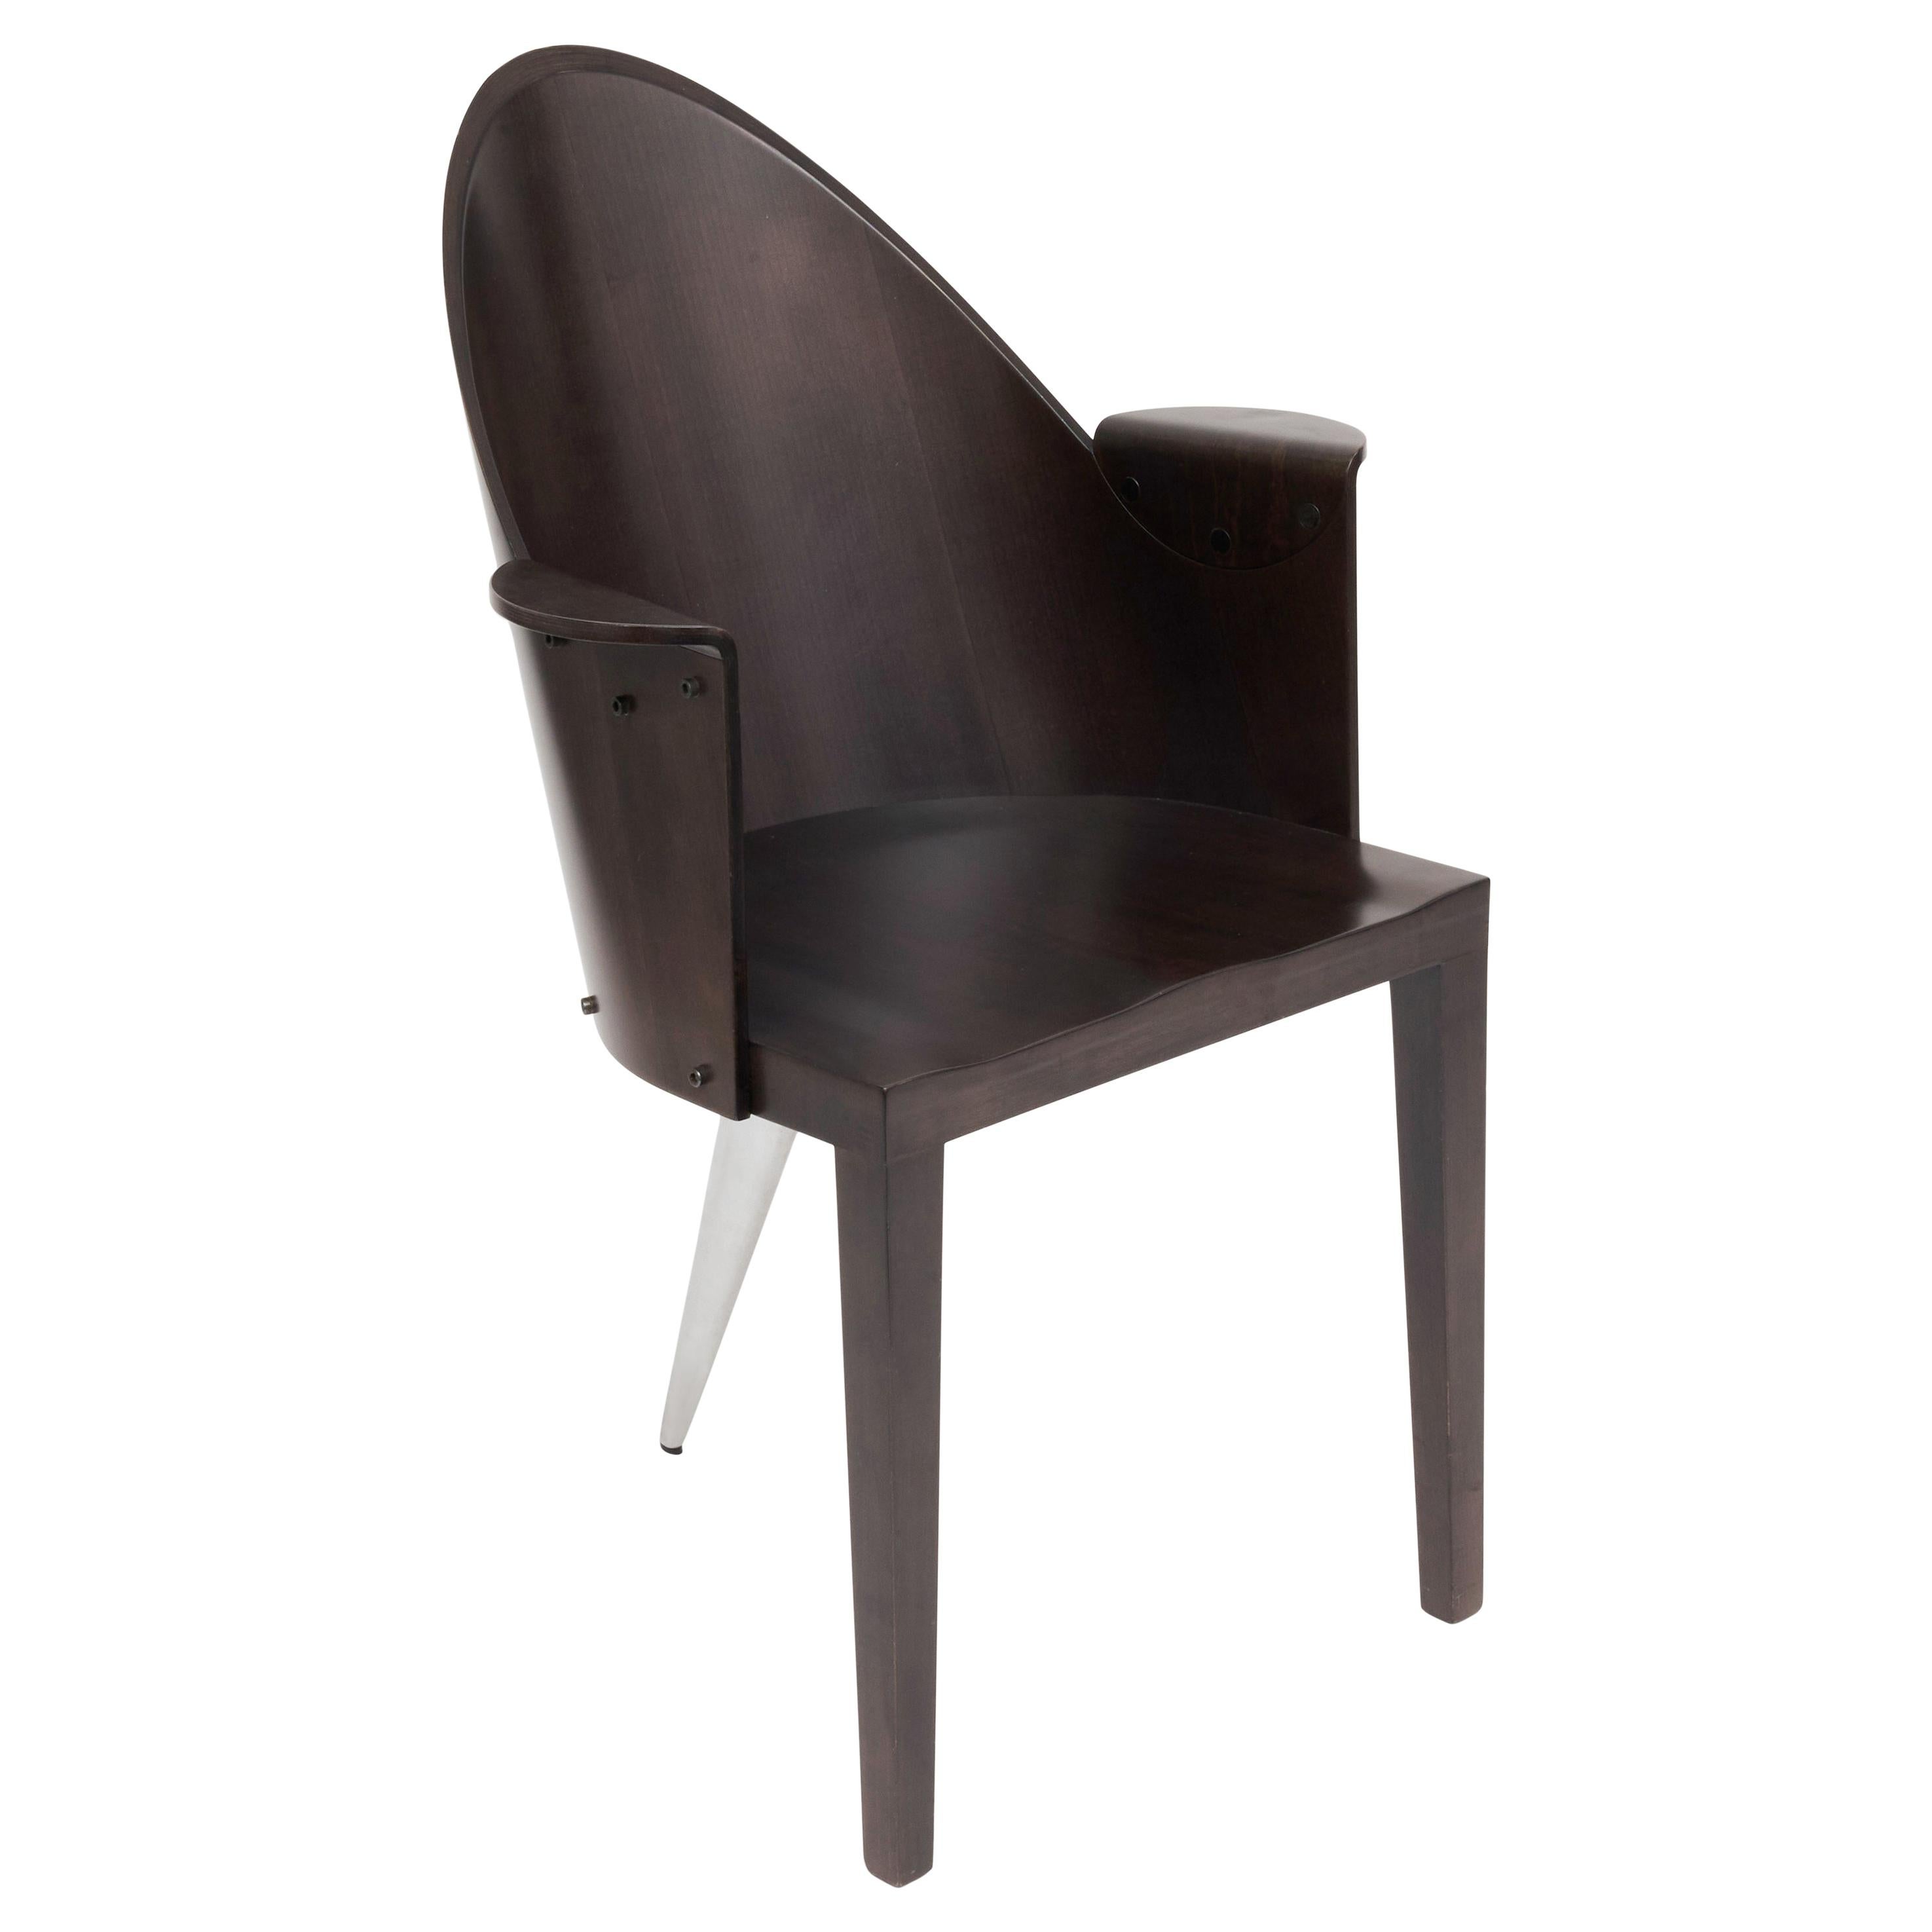 Philippe Starck "Royalton" Post-Modern 3-Leg Chair